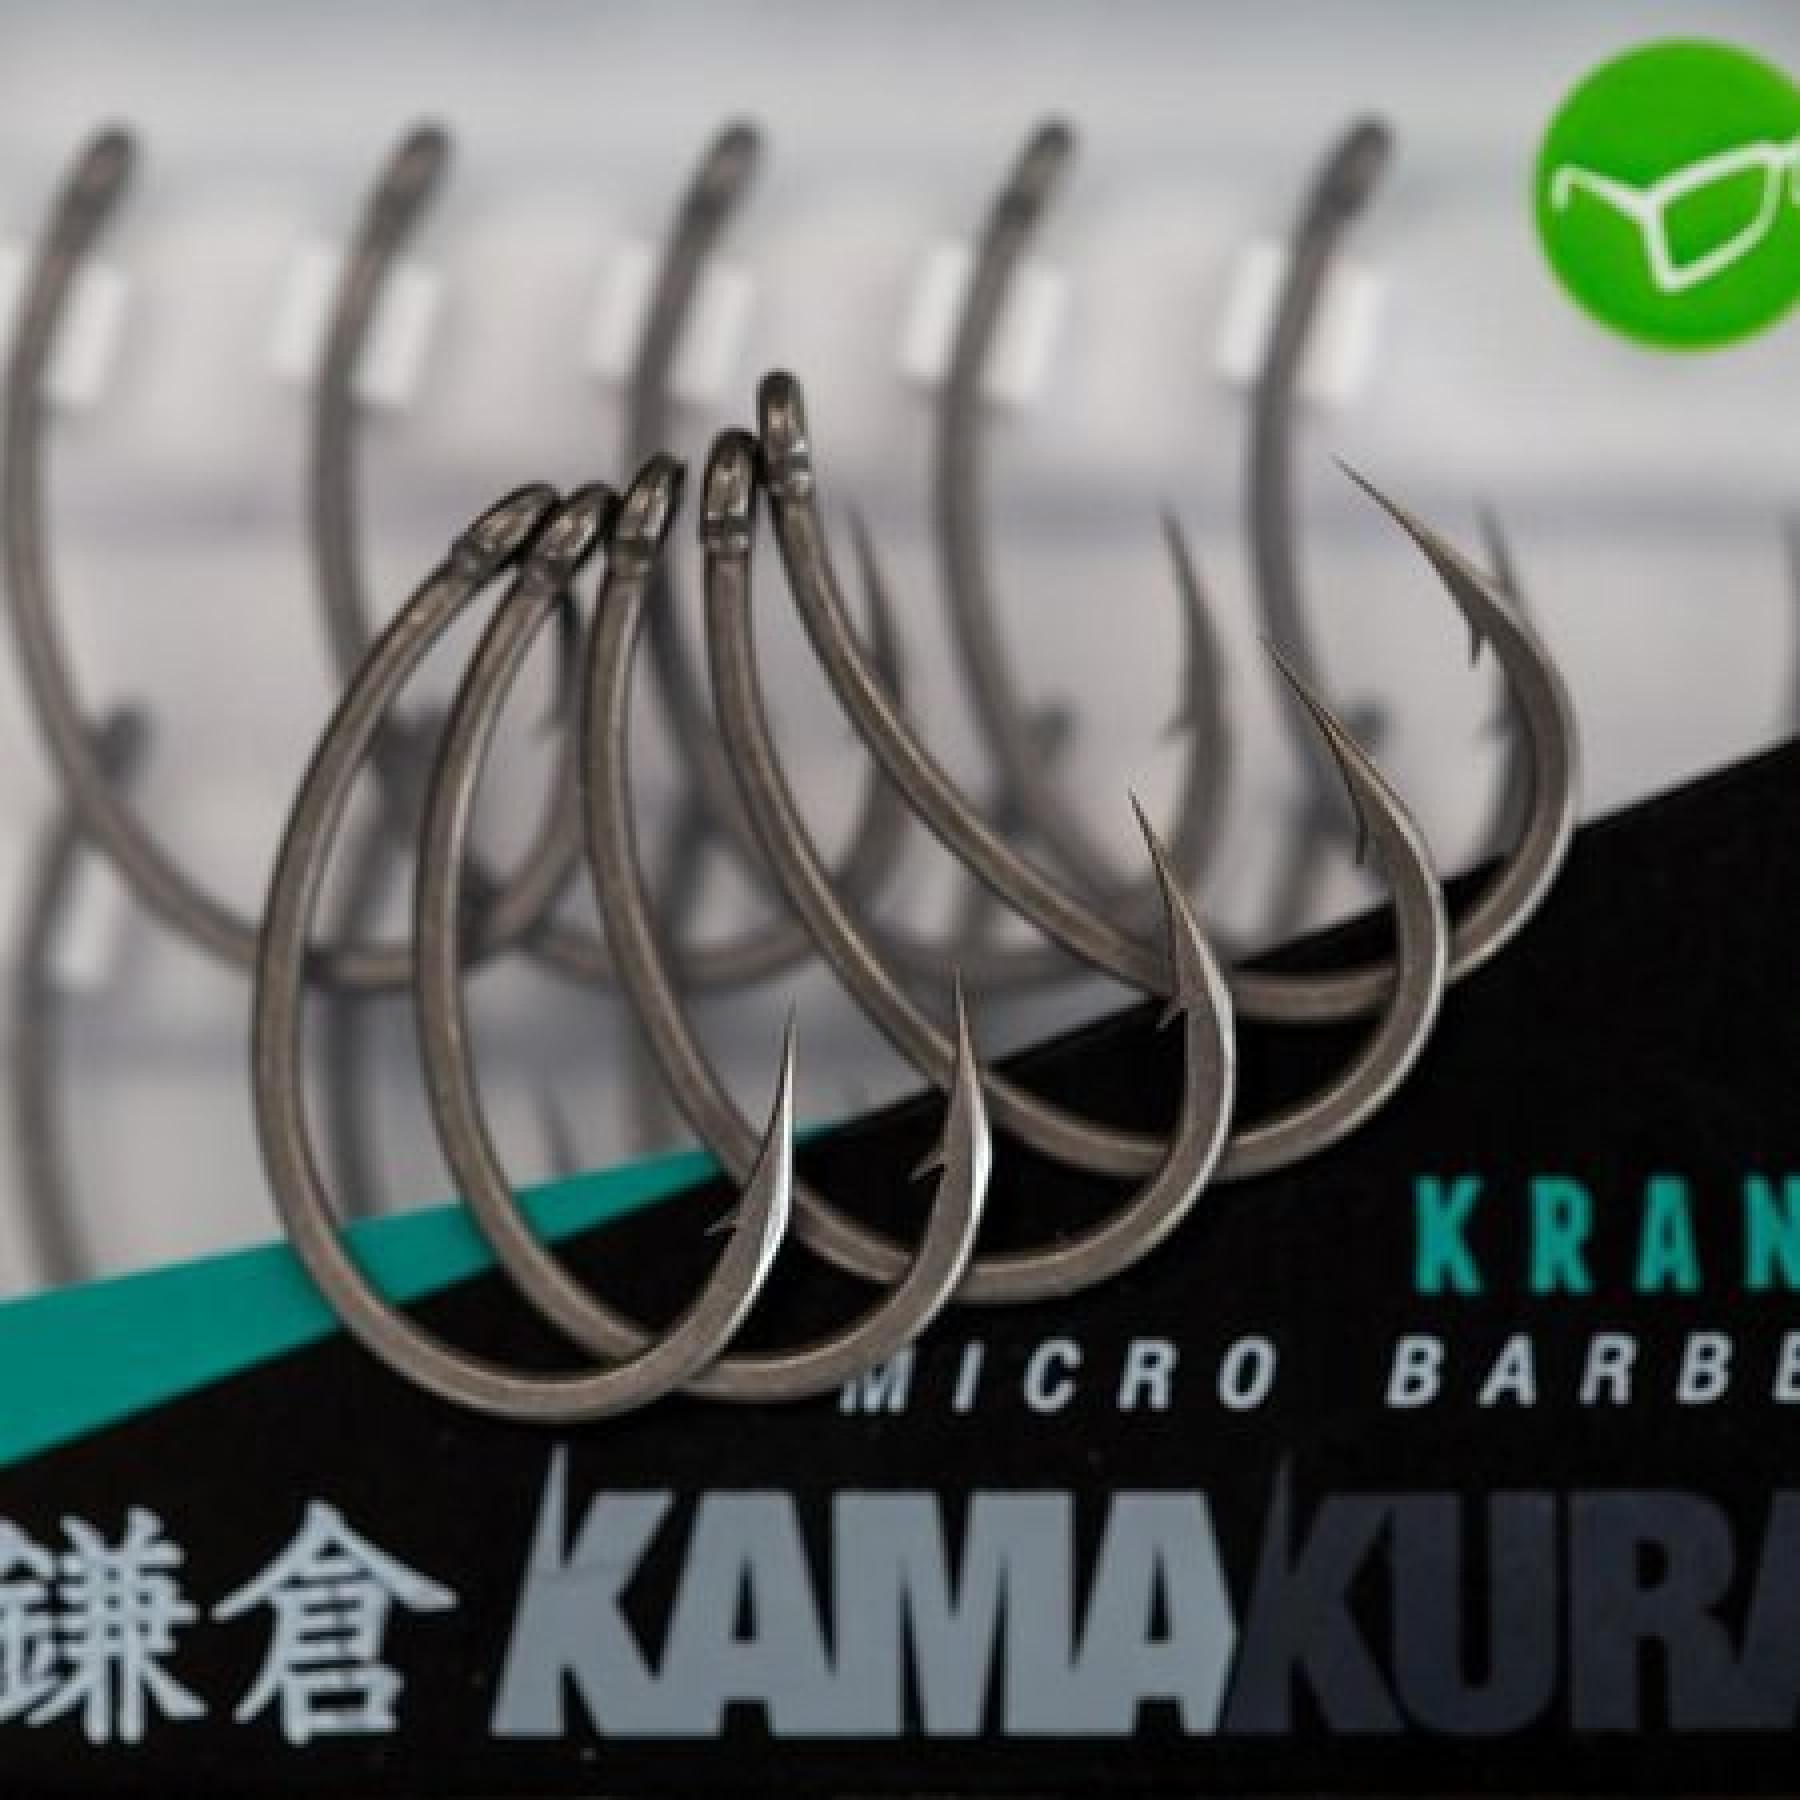 Haken korda Kamakura Krank S8